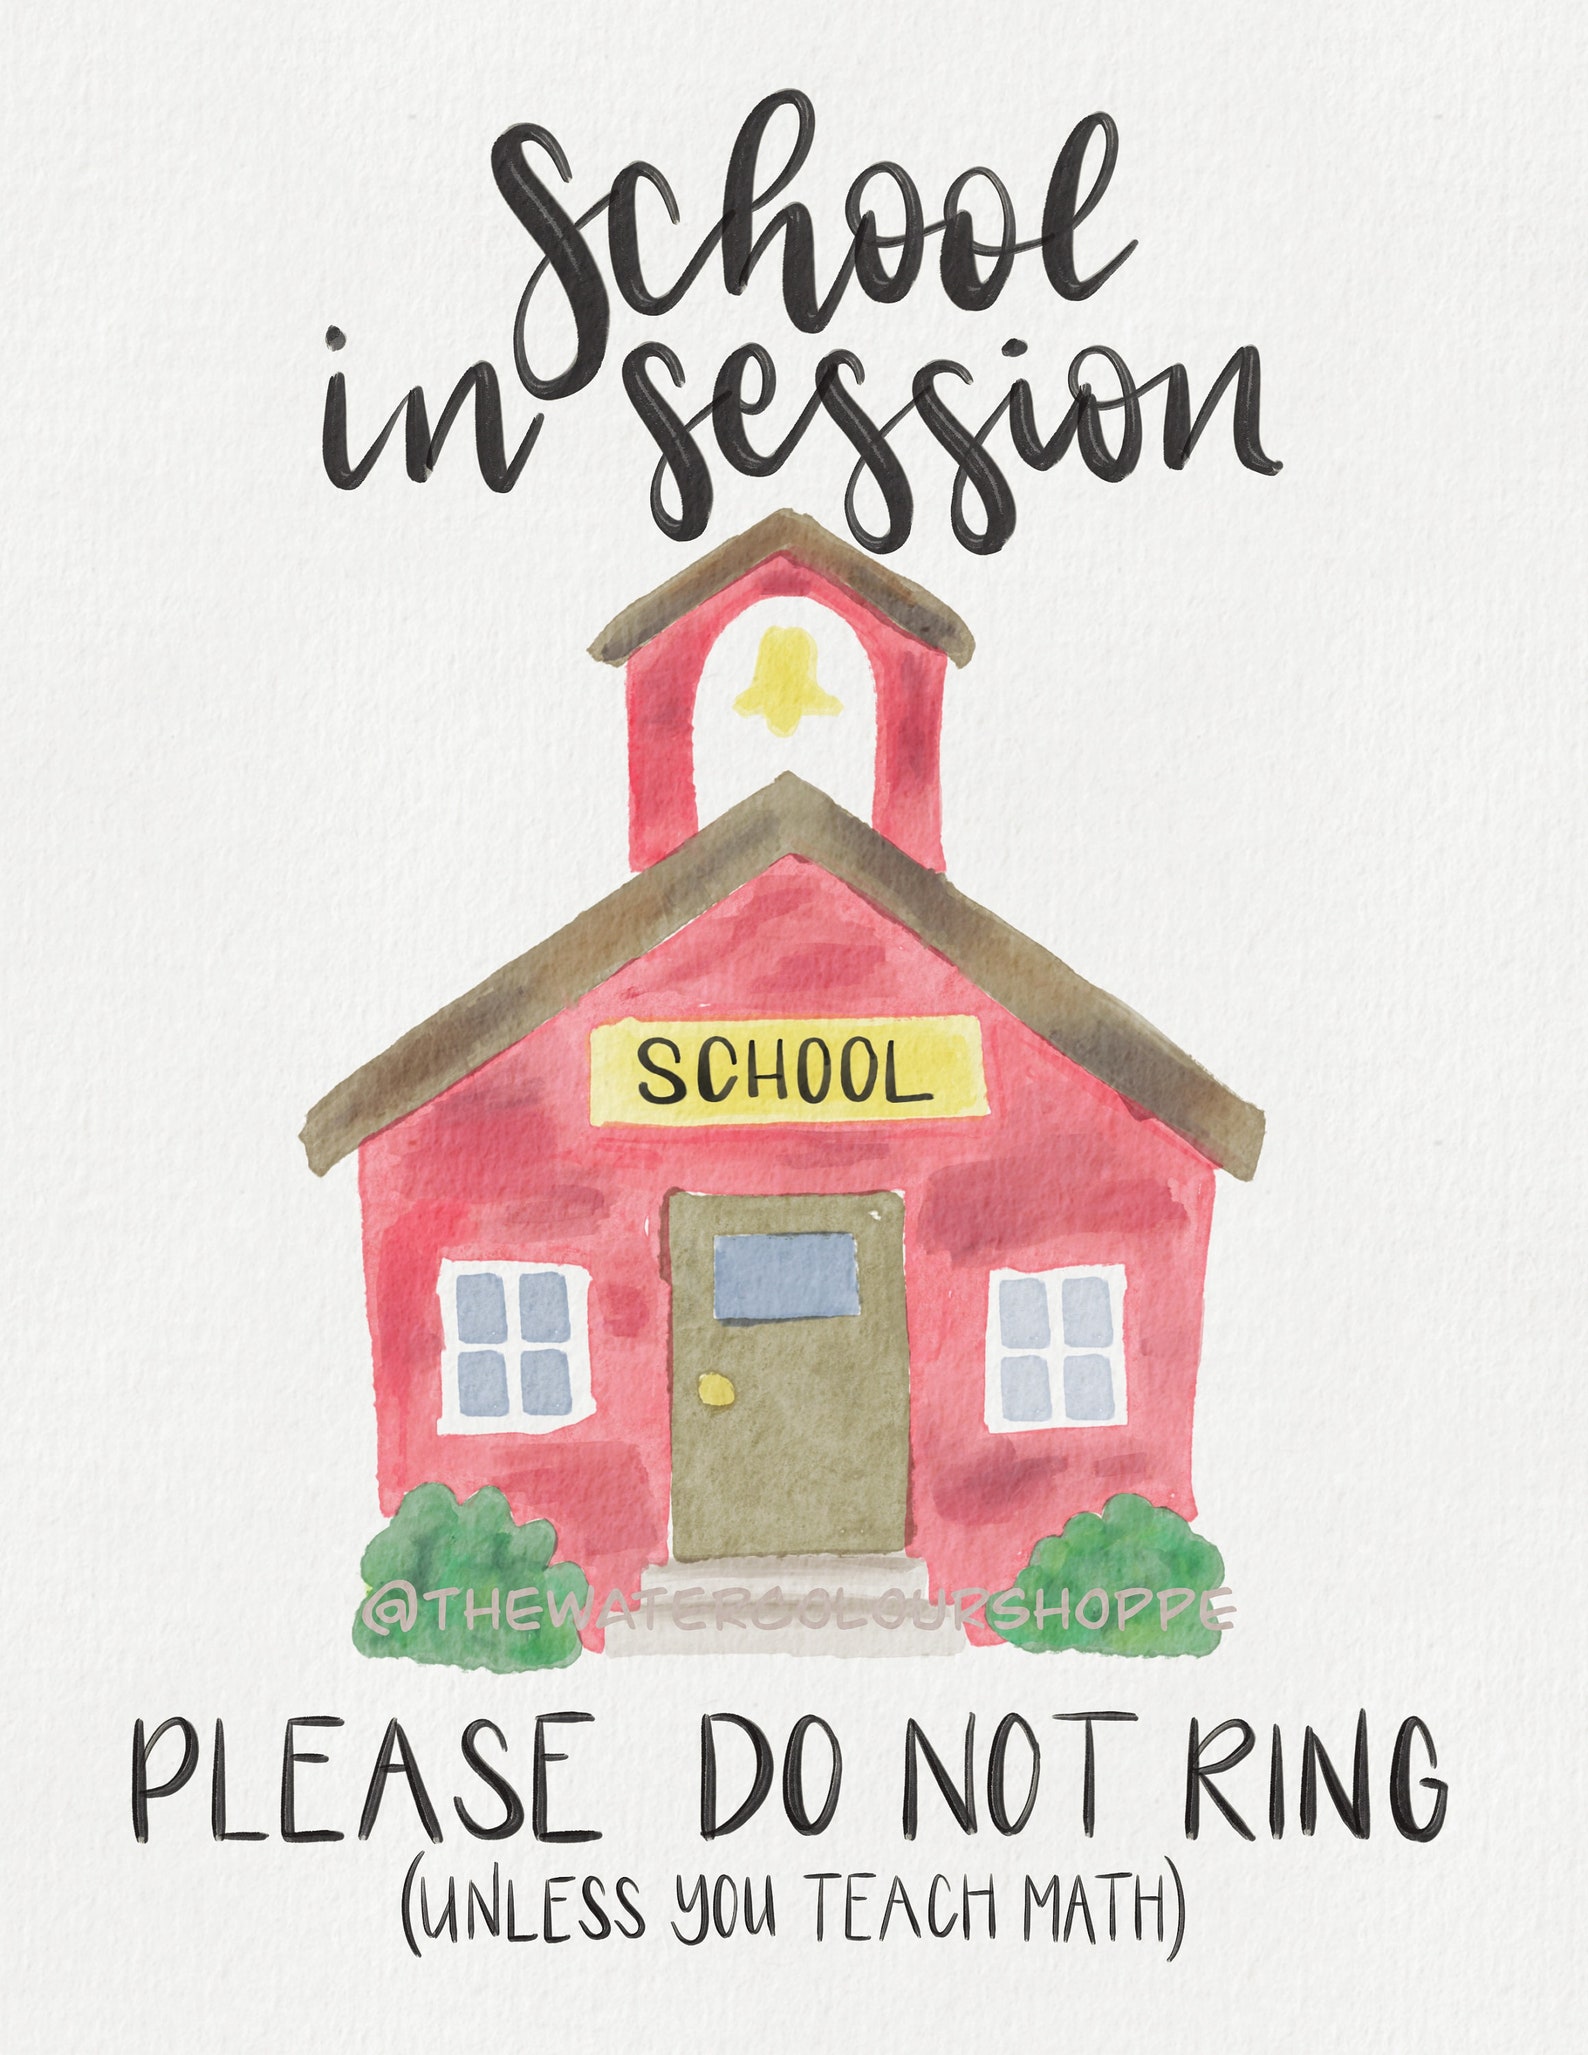 school-in-session-e-learning-door-sign-homeschool-etsy